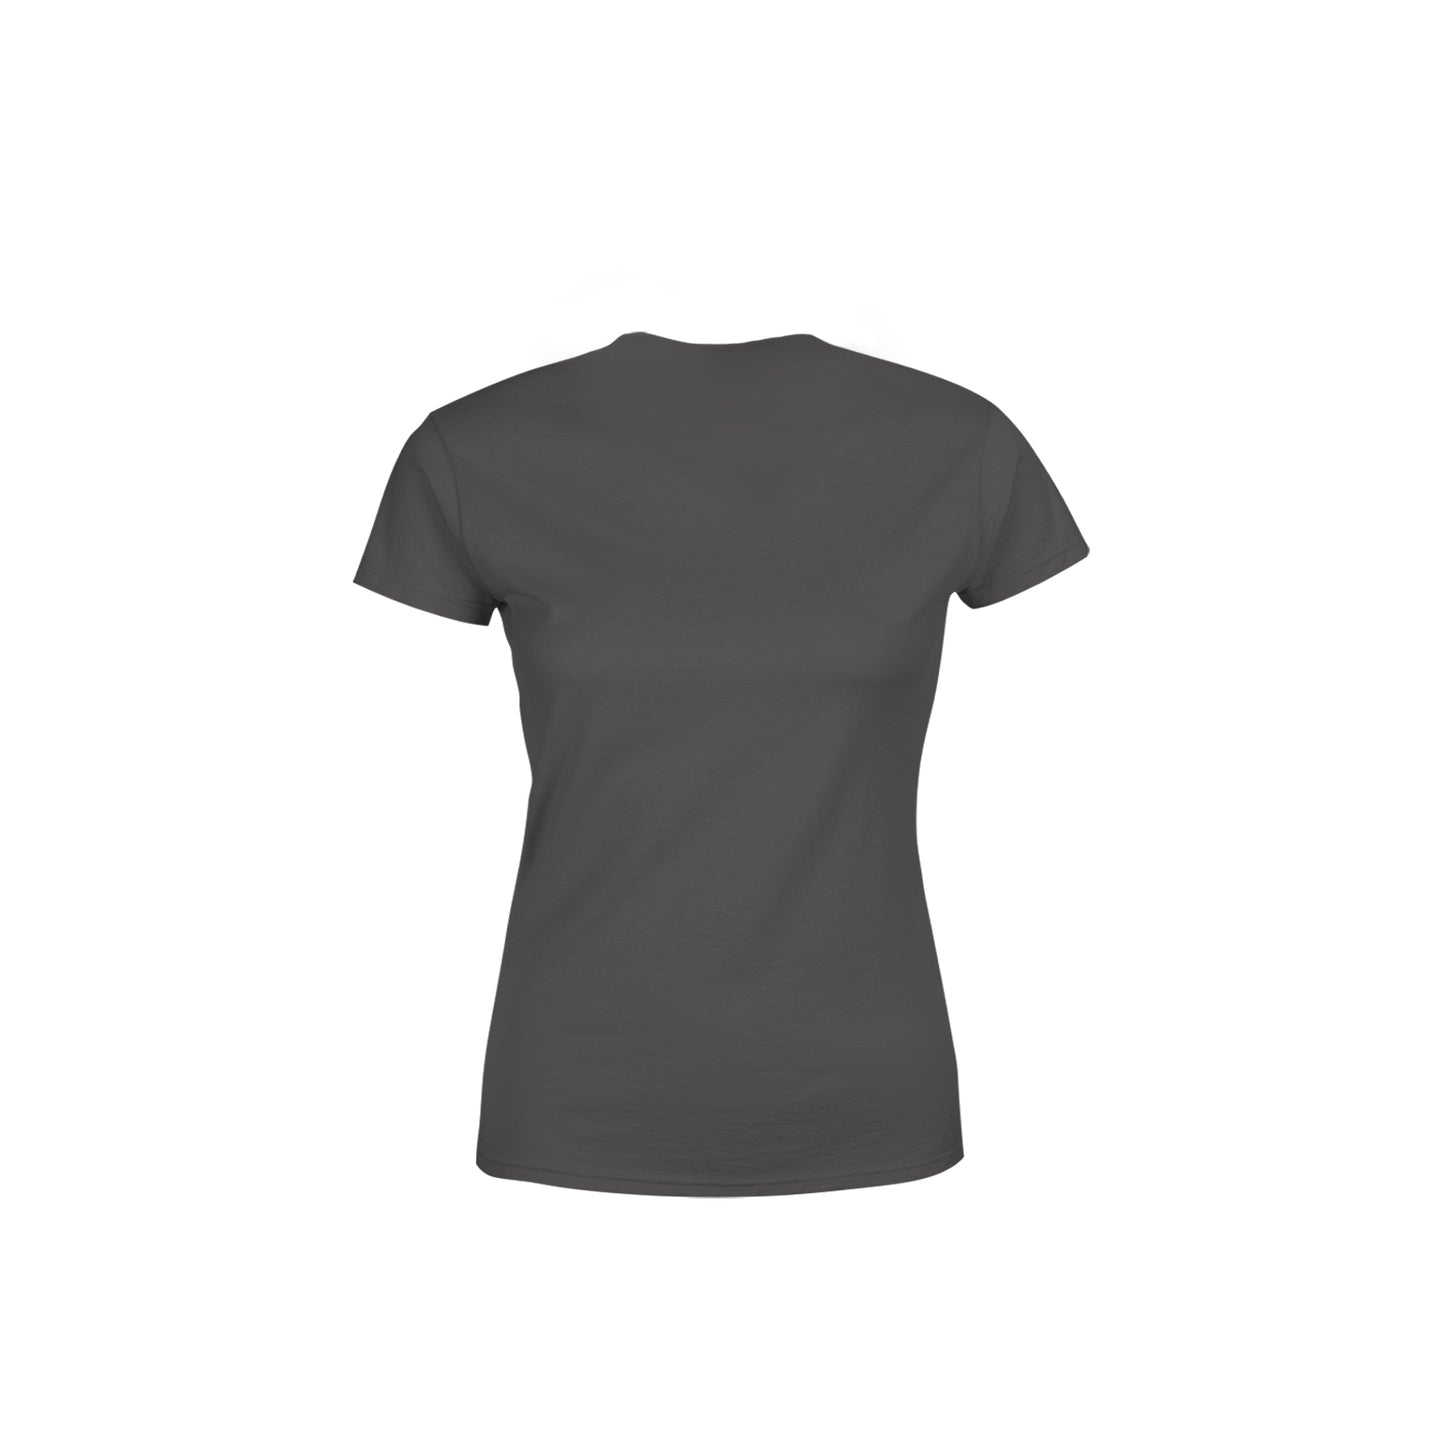 00 Number Women's T-Shirt (Charcoal Grey)